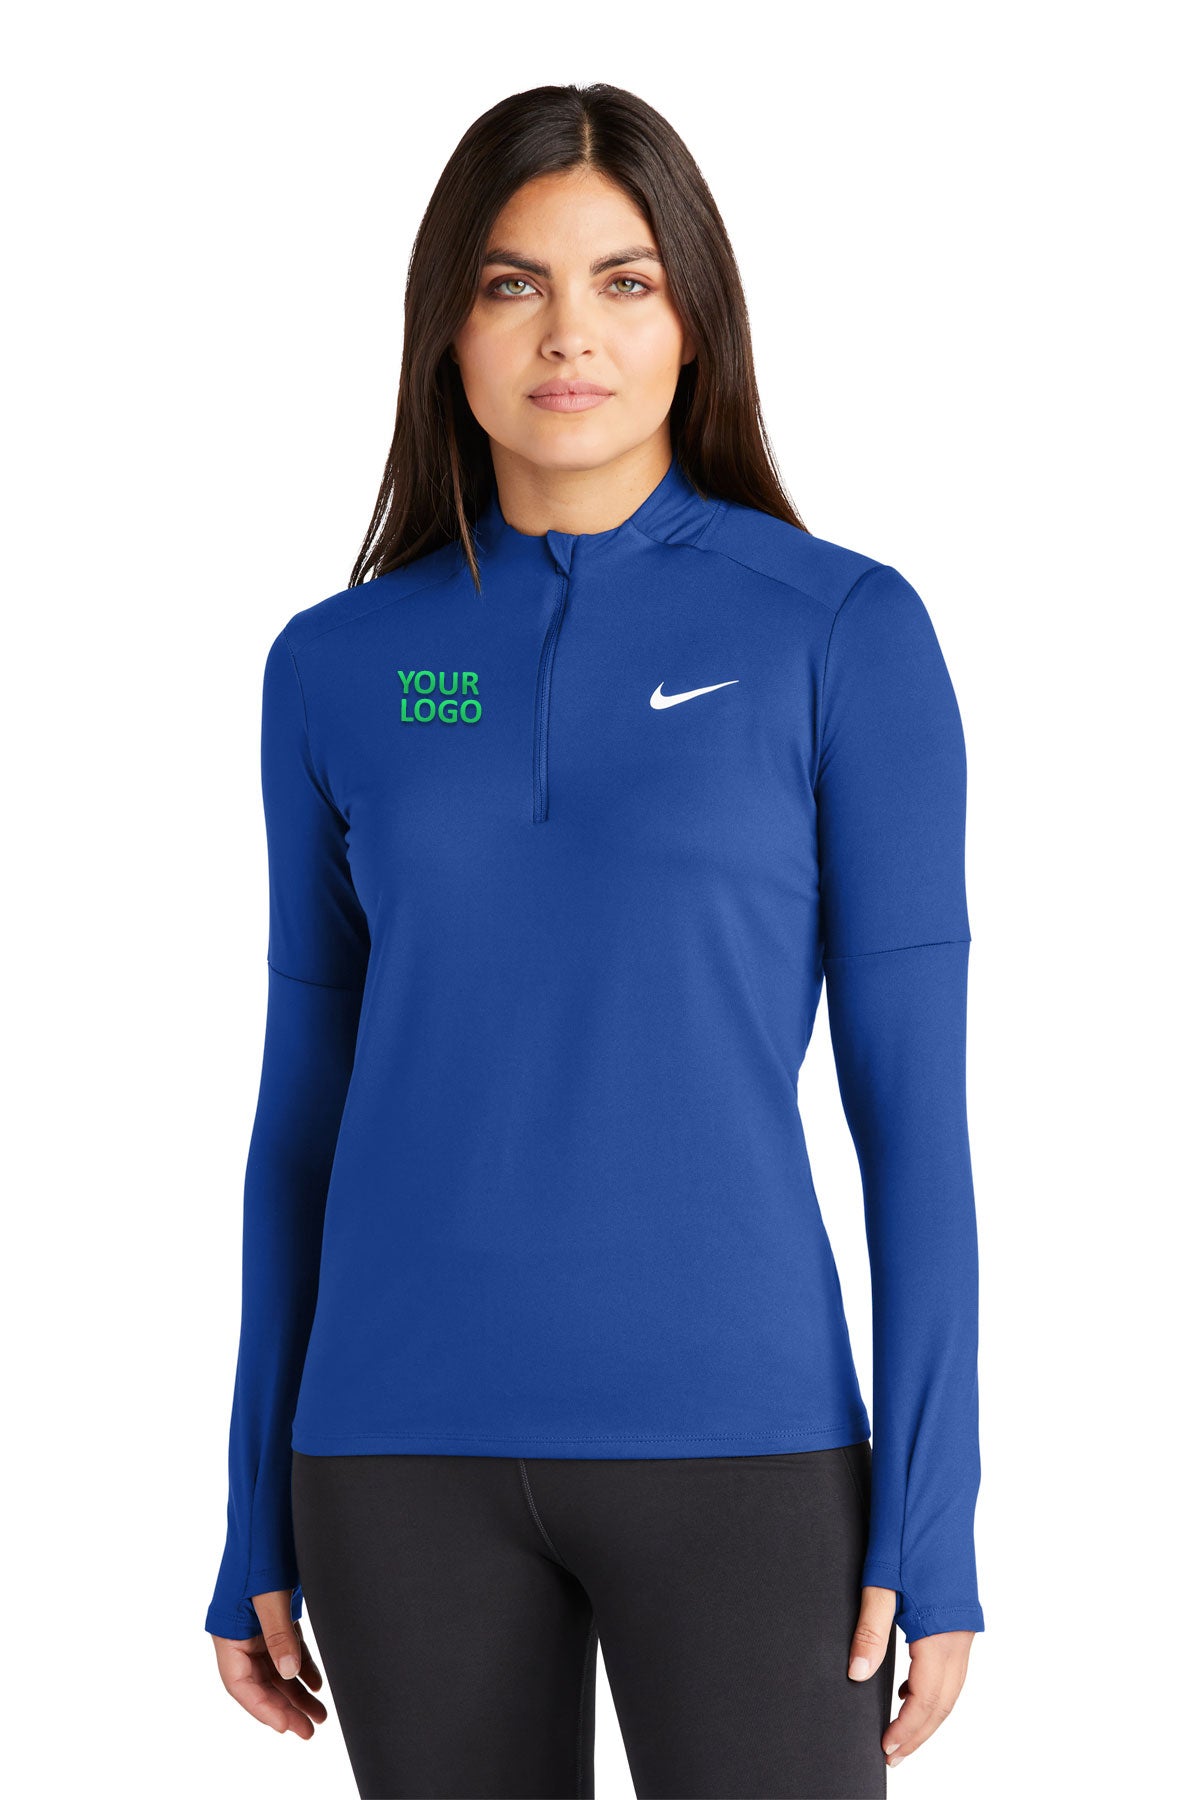 Nike Royal NKDH4951 custom logo sweatshirts